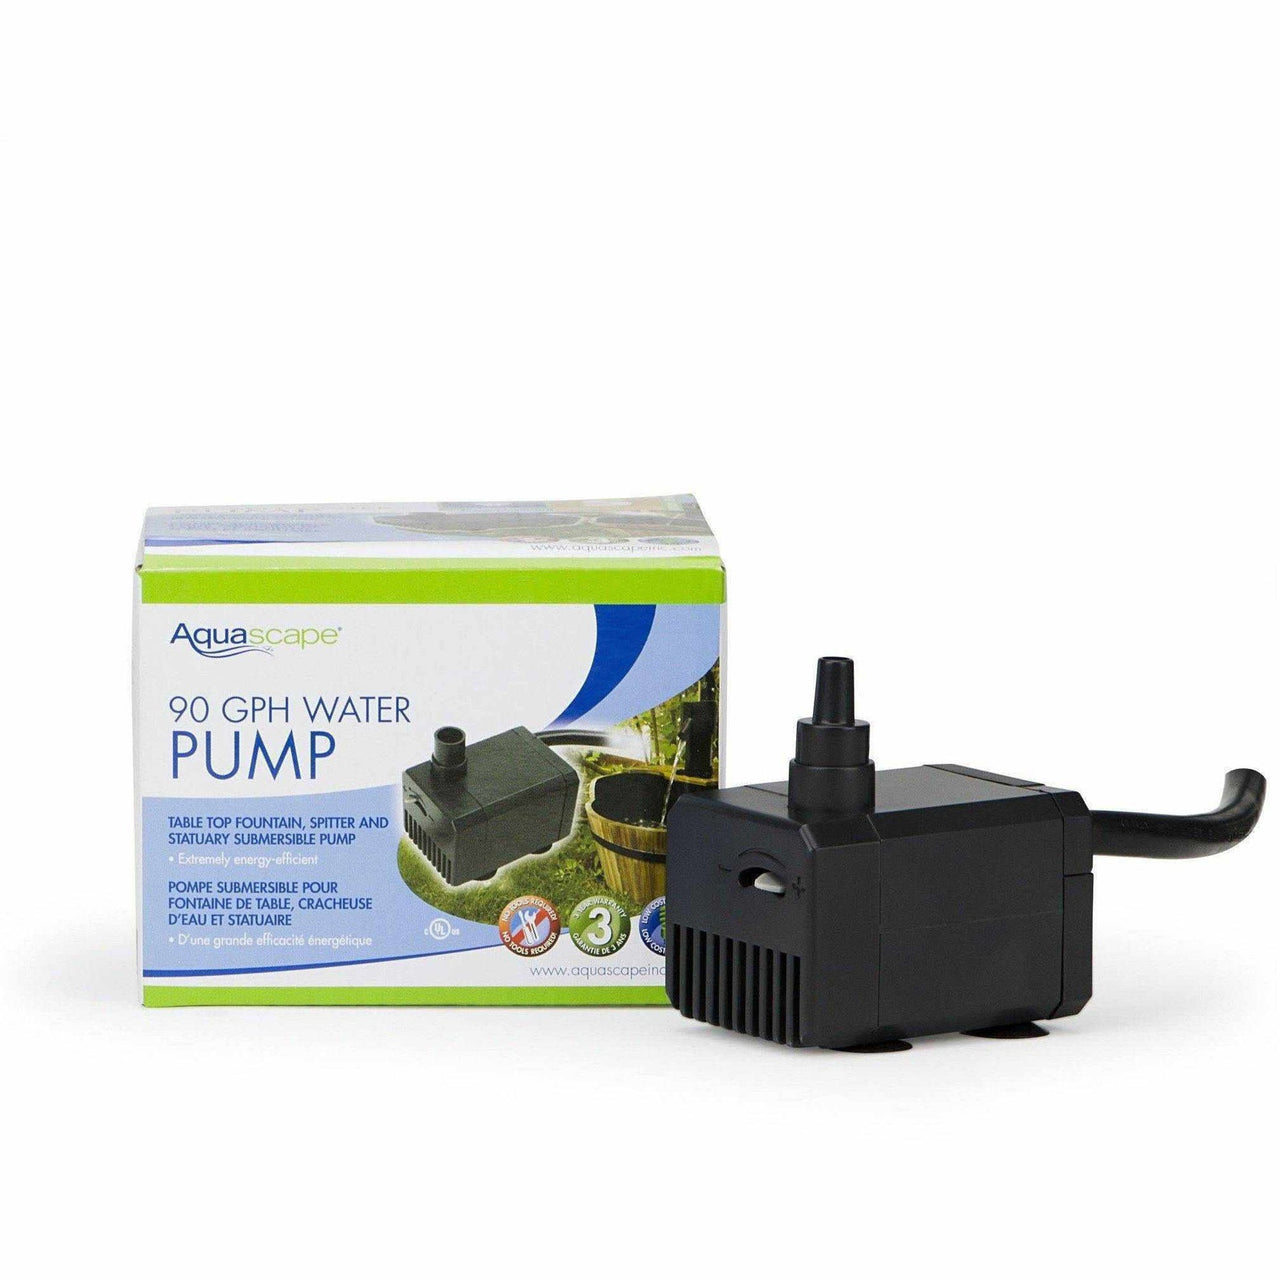 Aquascape 90 GPH Water Pump